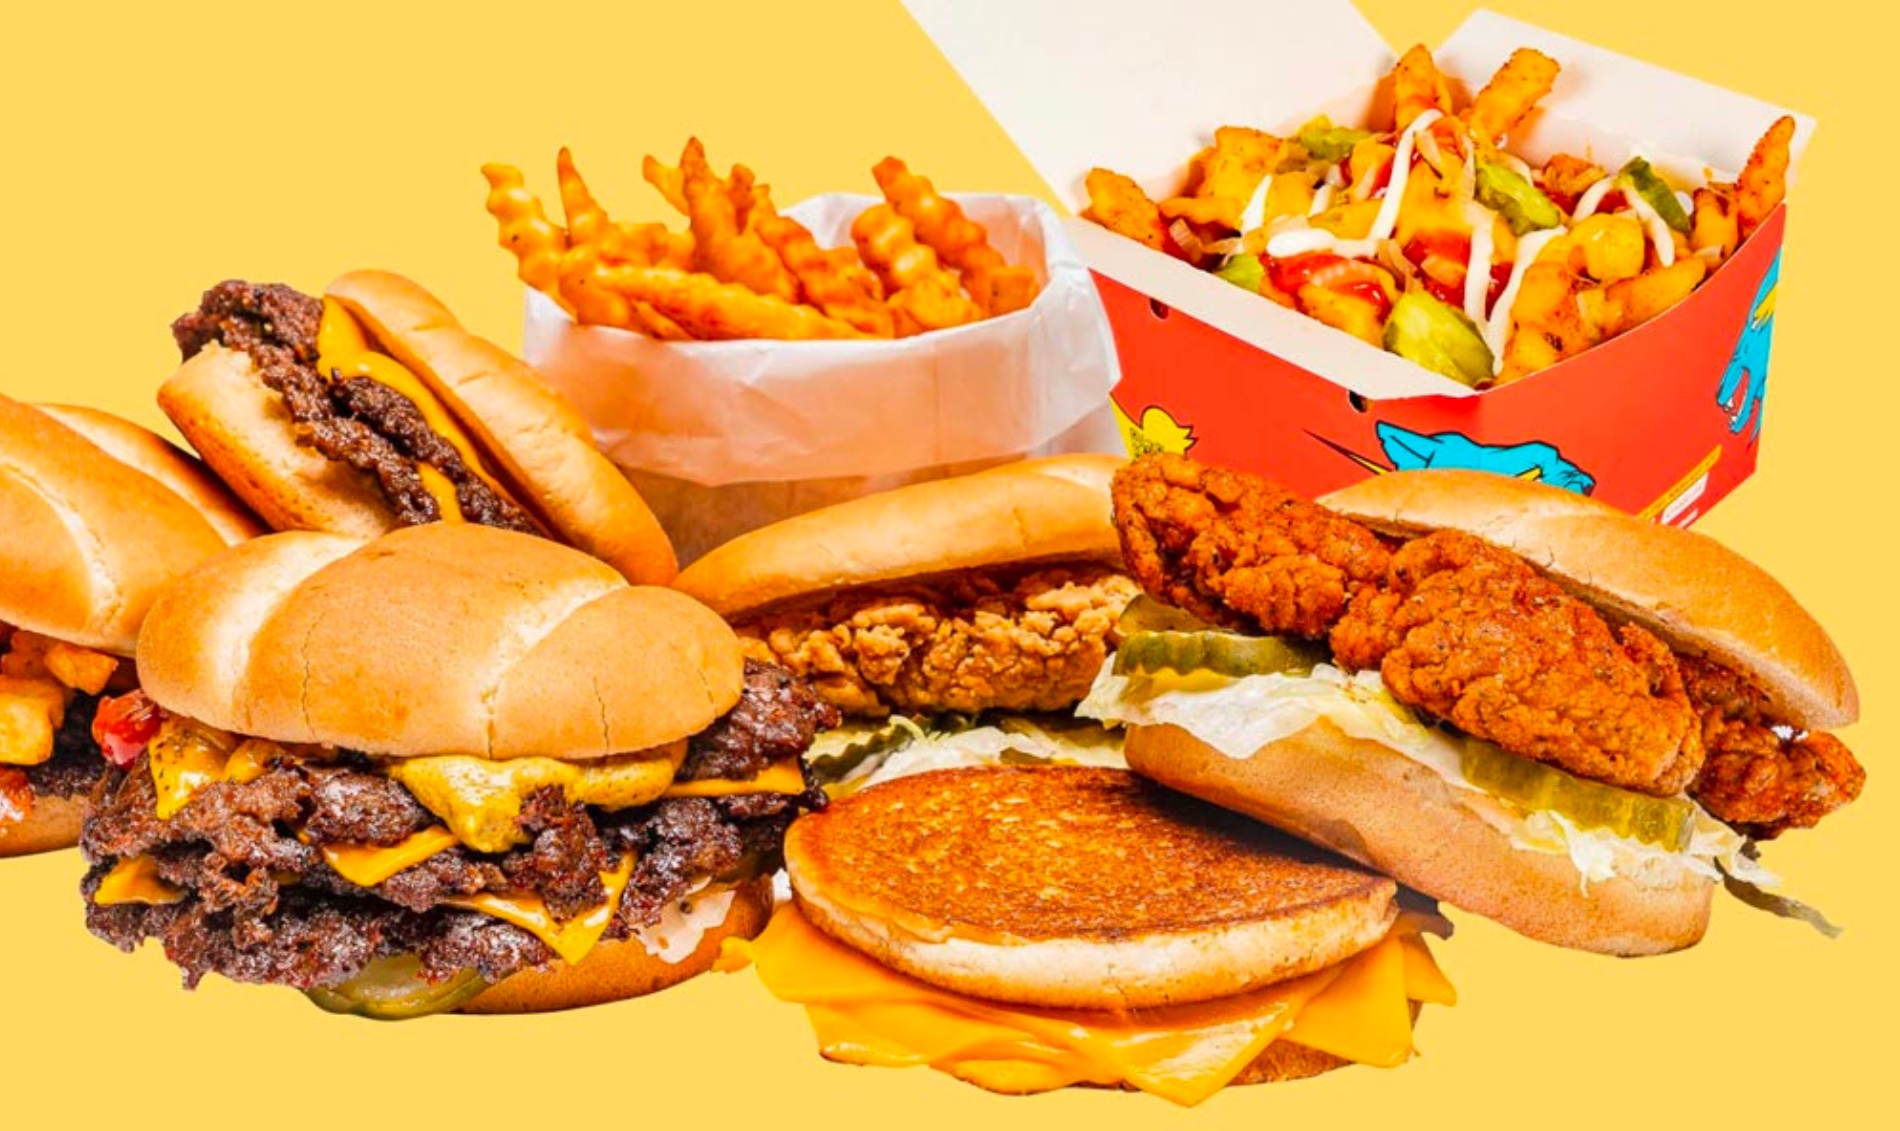 Reddit MrBeast Burgers, MrBeast vs. Virtual Dining Concepts MrBeast  Burgers Lawsuit